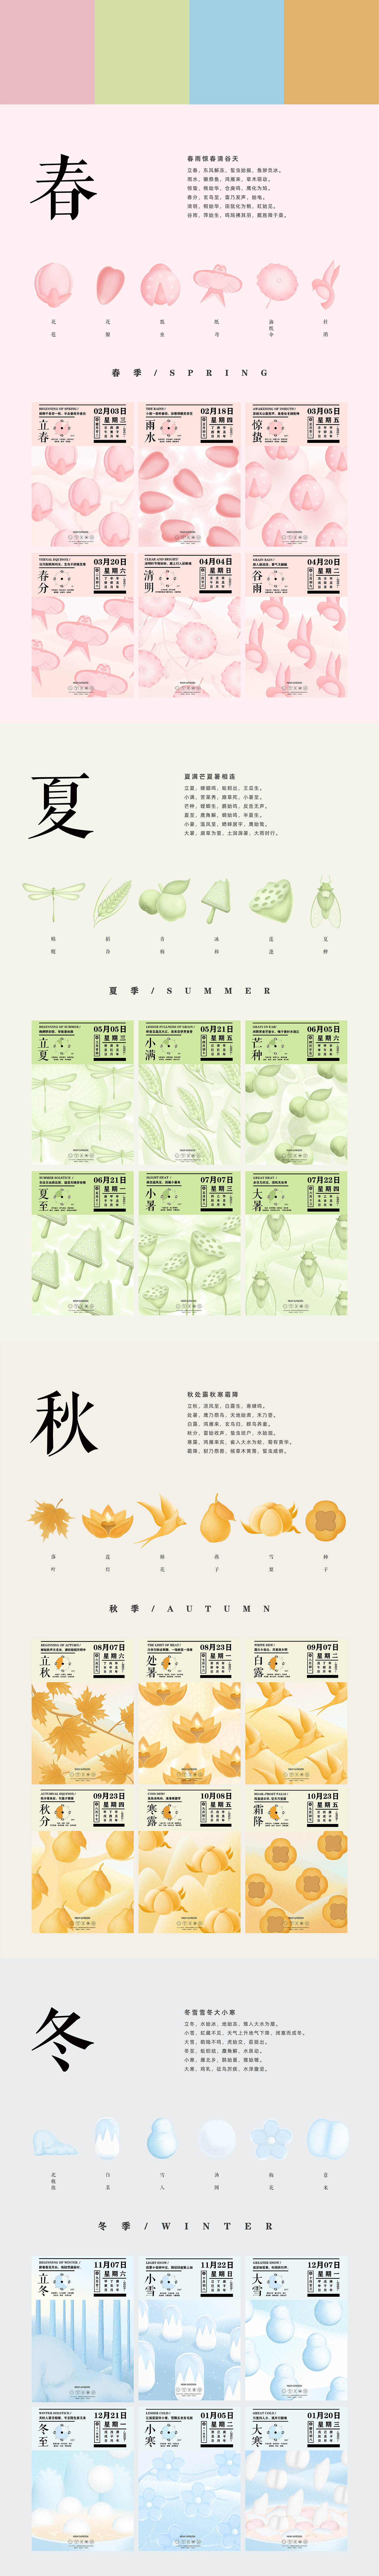 24 solar terms 24节气 graphic illustrations poster posters 二十四节气 插画 海报